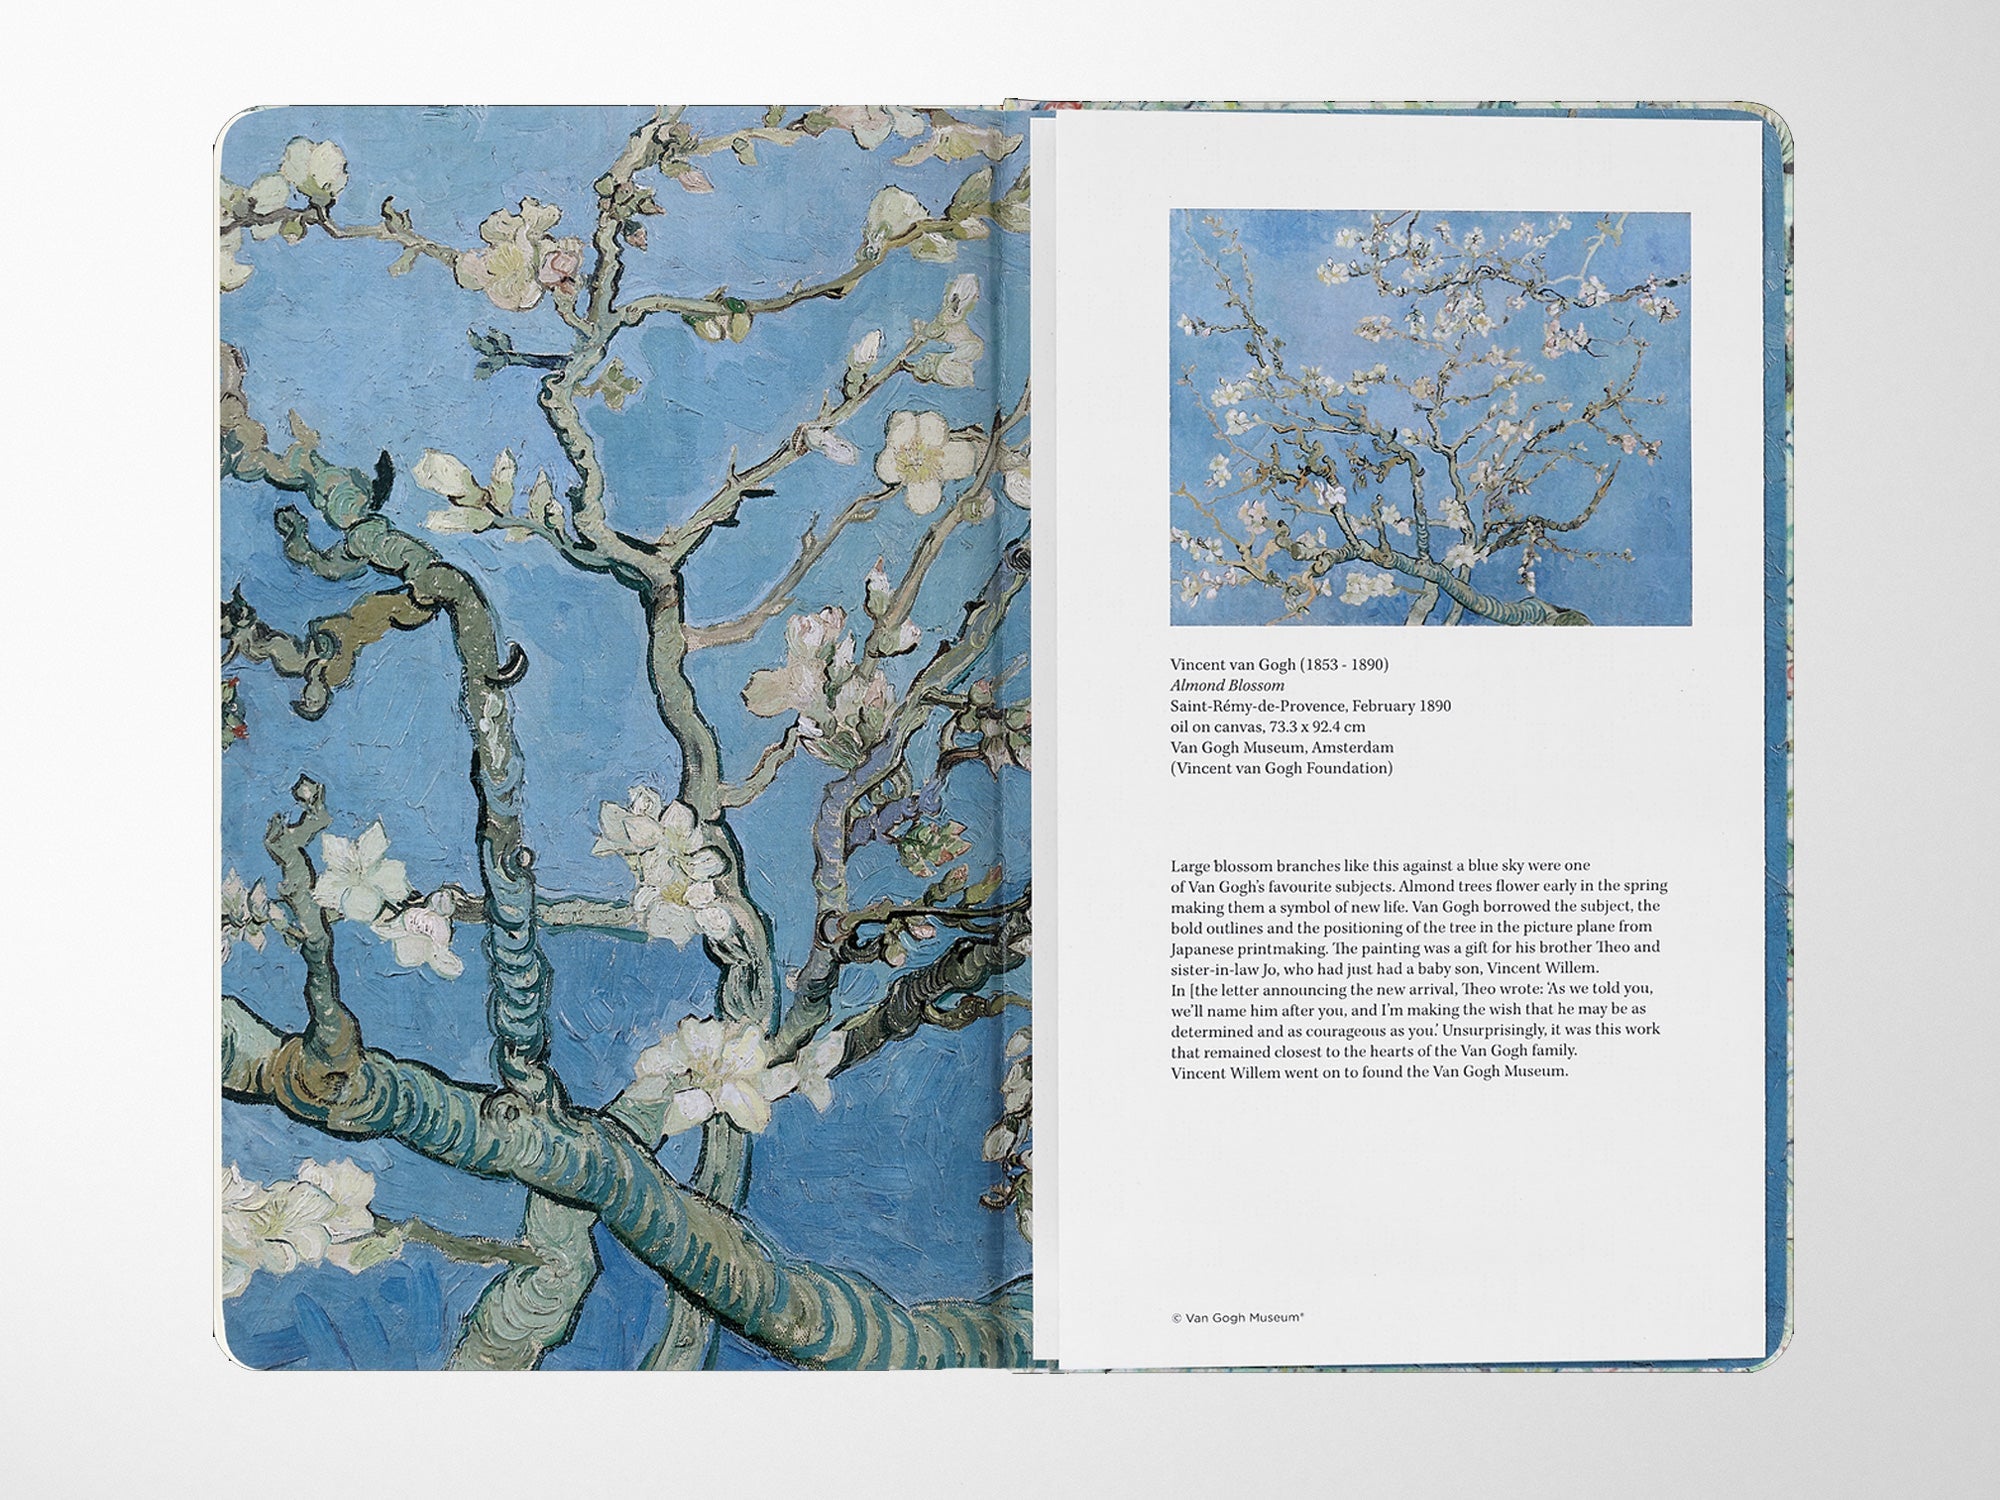 Moleskine x Van Gogh Museum Limited Edition Art Sketchbook